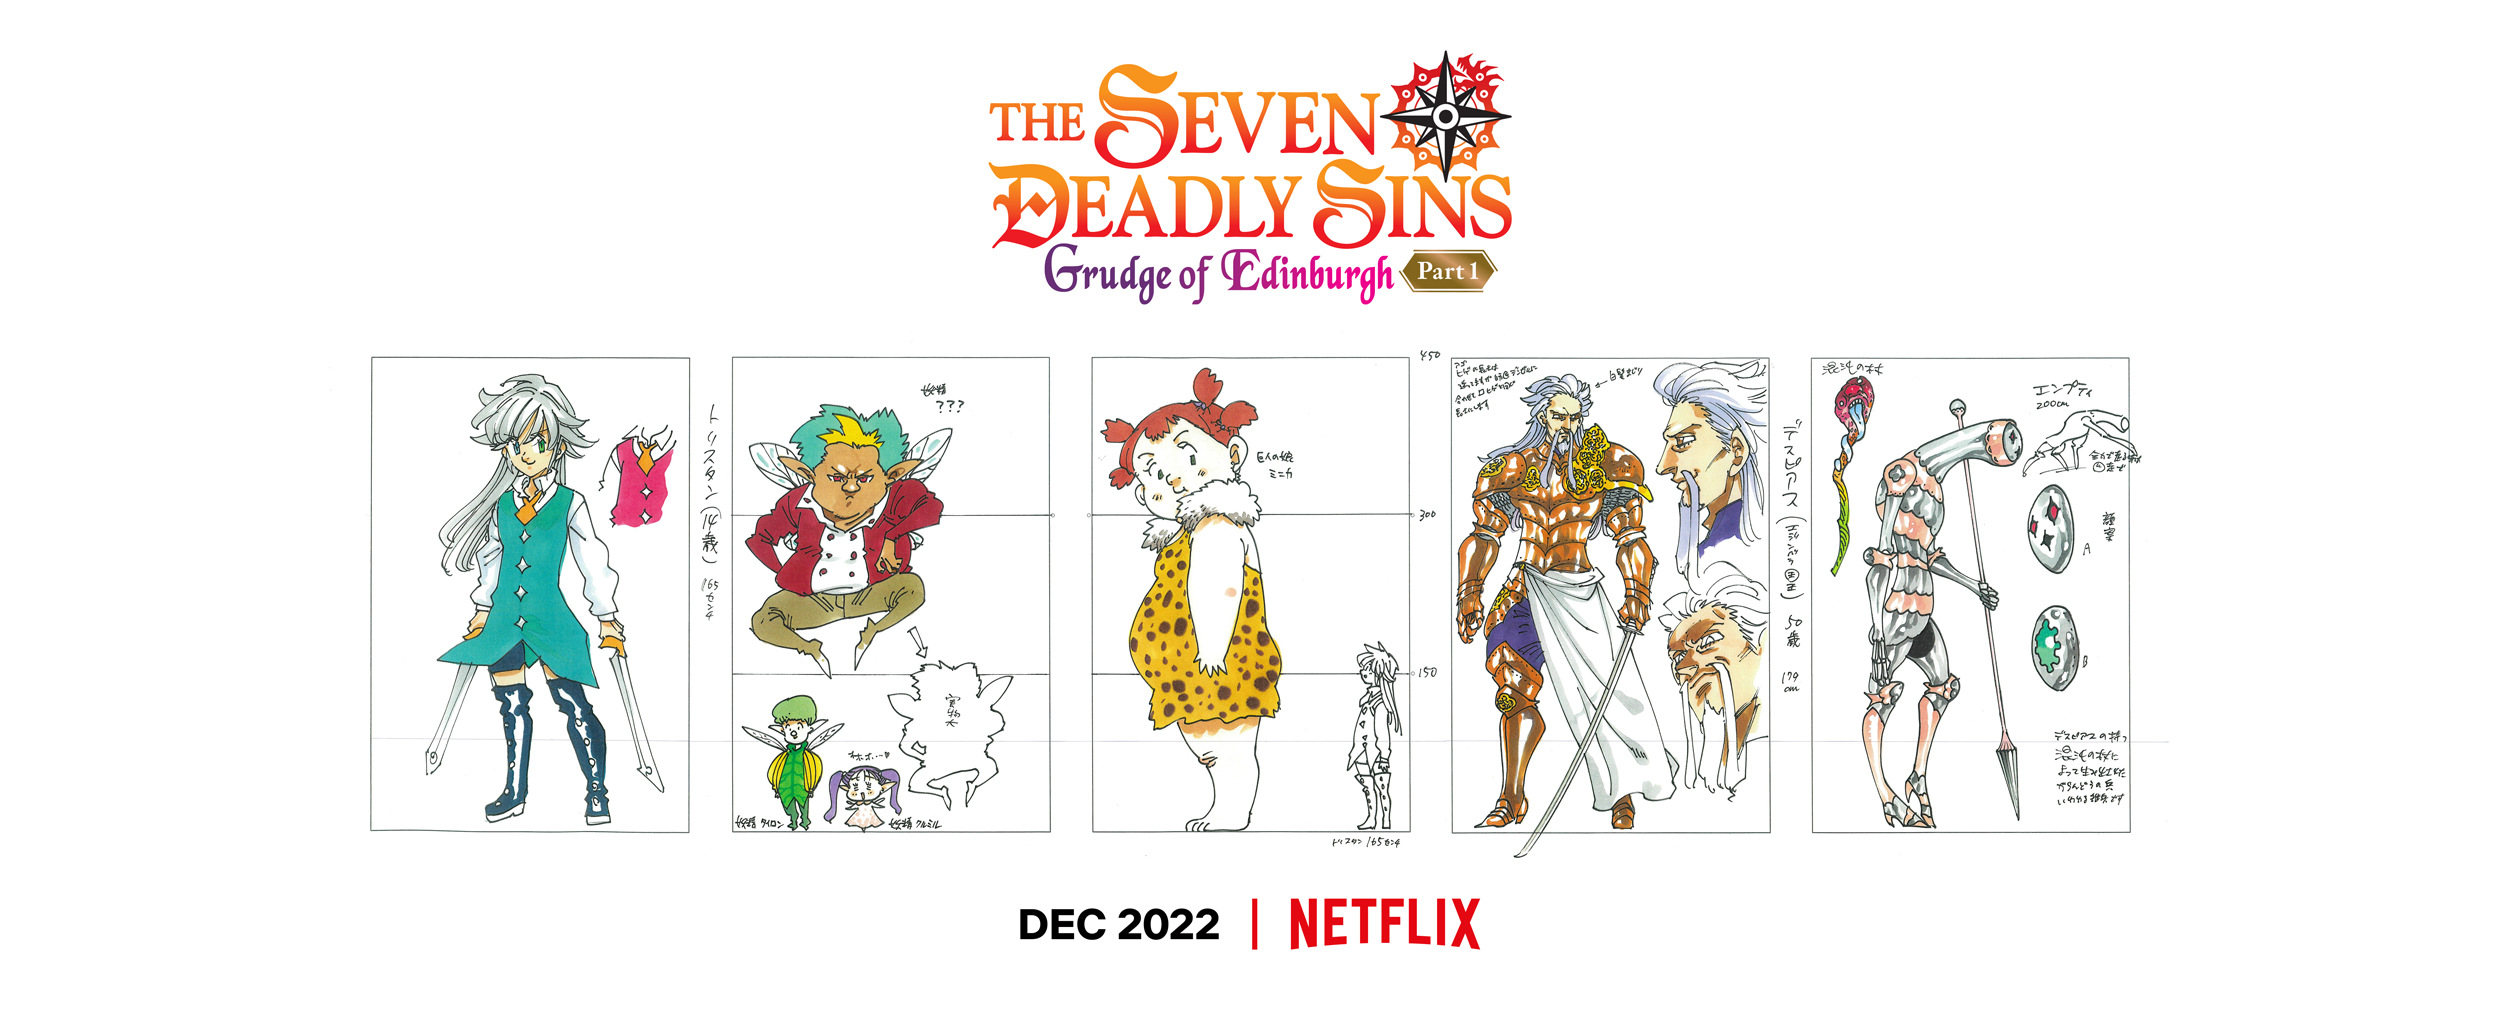 The Seven Deadly Sins: Grudge of Edinburgh Part 1 estreia em